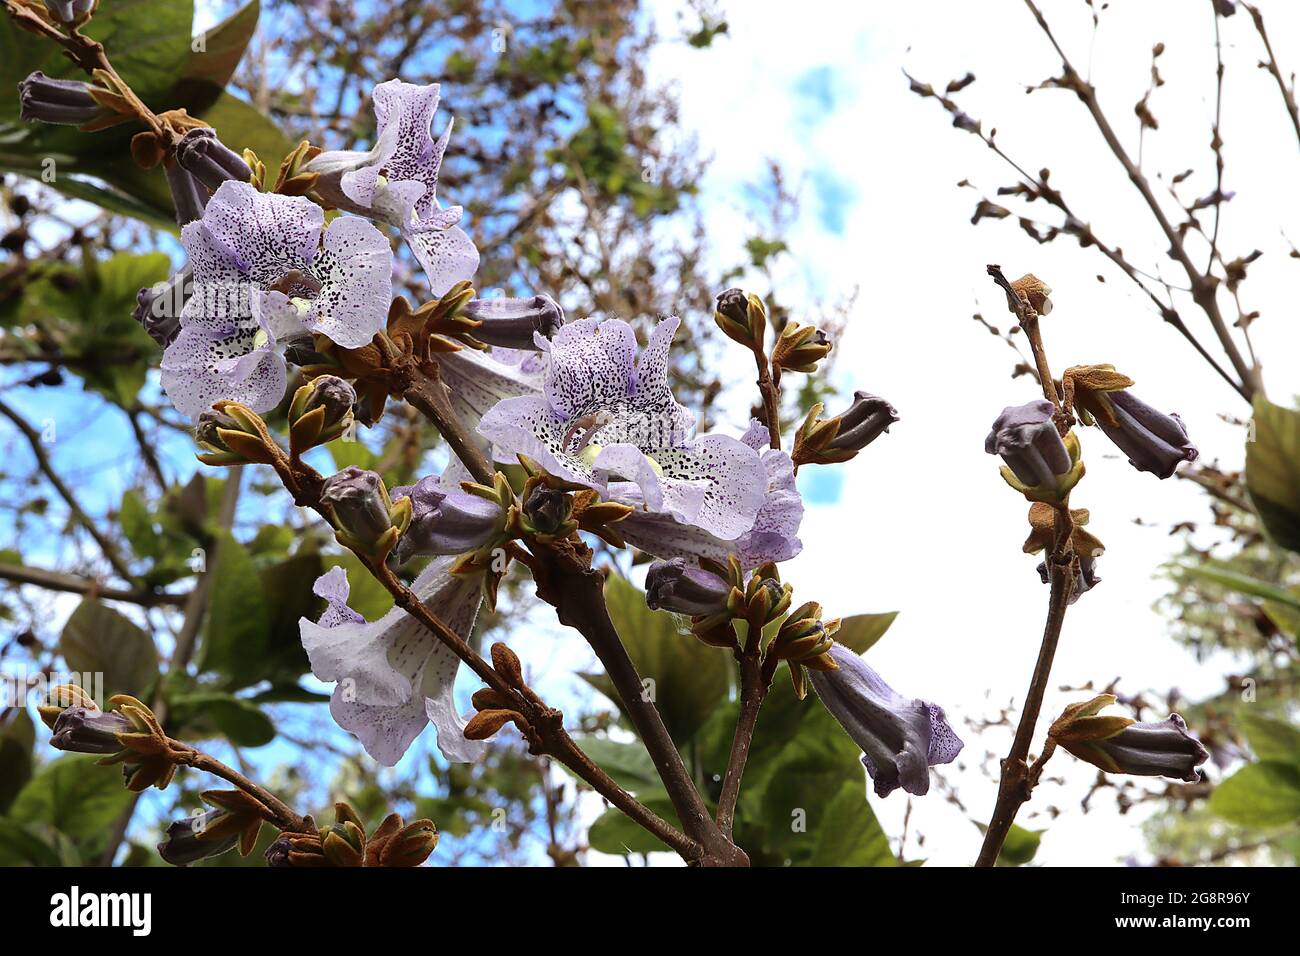 Pawlonia kawakamii Sapphire dragon tree – wide open lilac purple foxglove-like flowers with cream throat and dark purple freckles,  May, England, UK Stock Photo